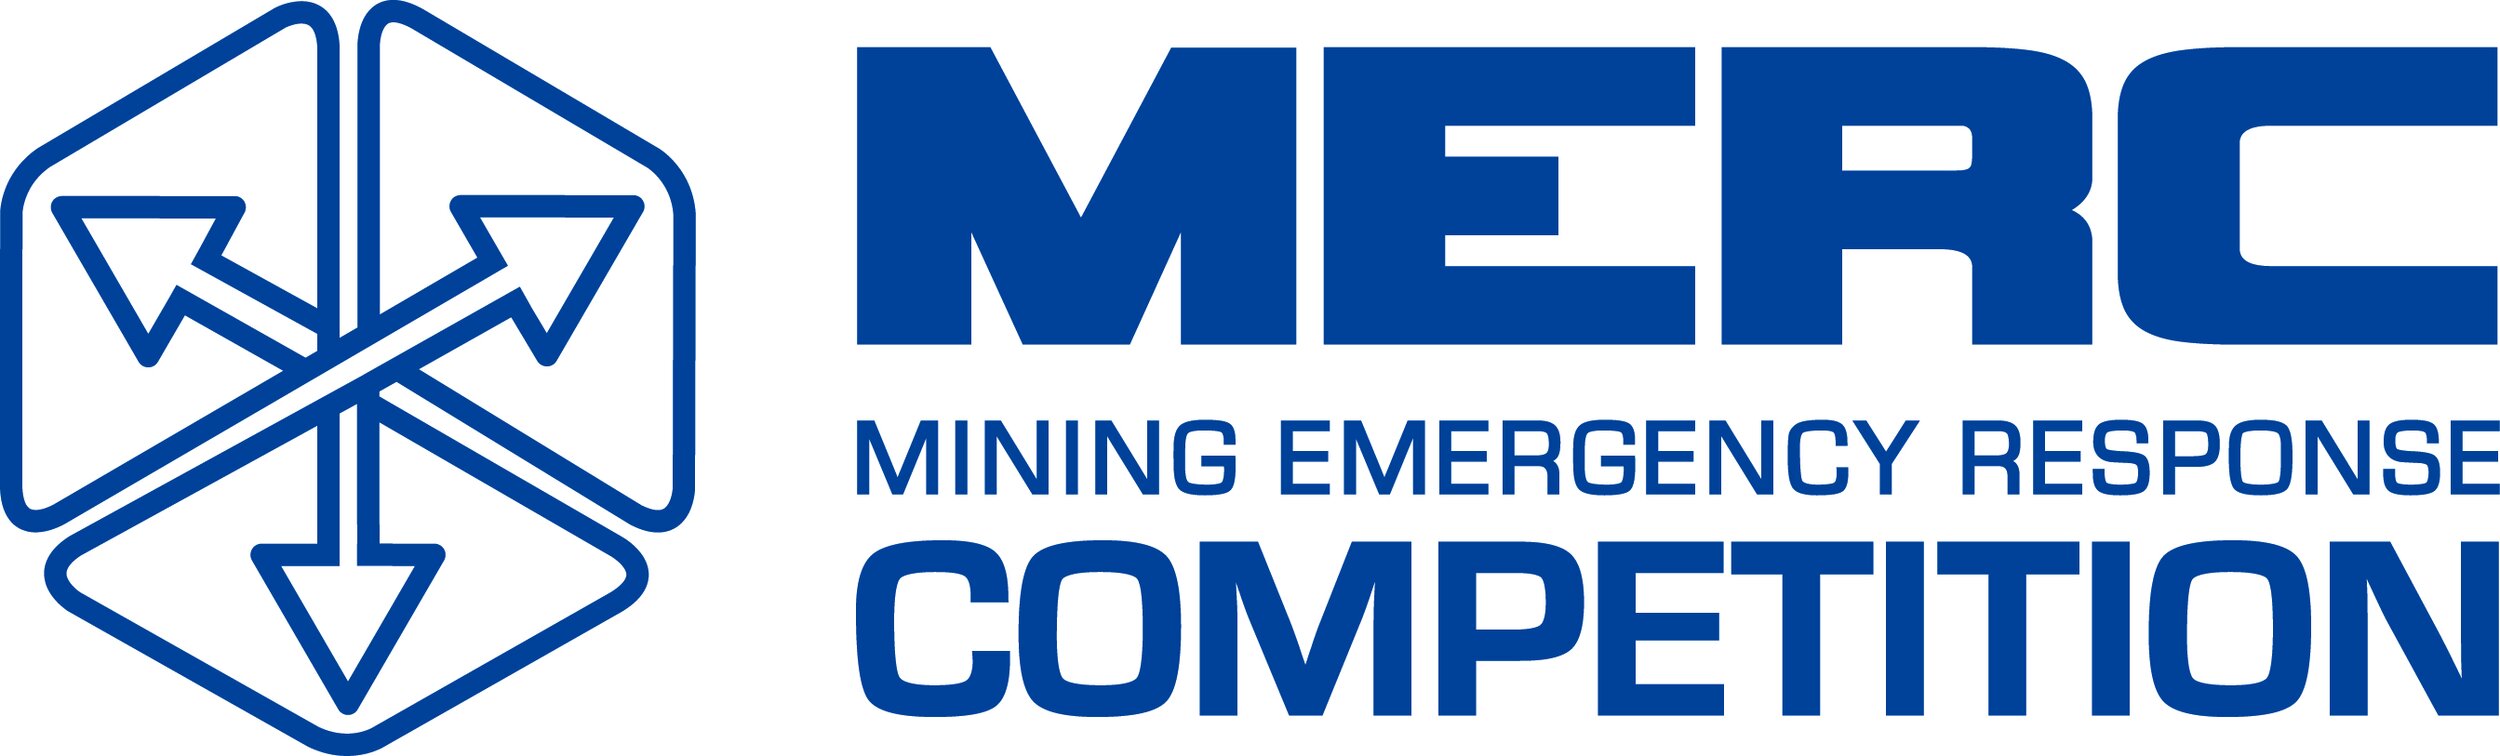 Mining Emergency Response Competition (MERC)